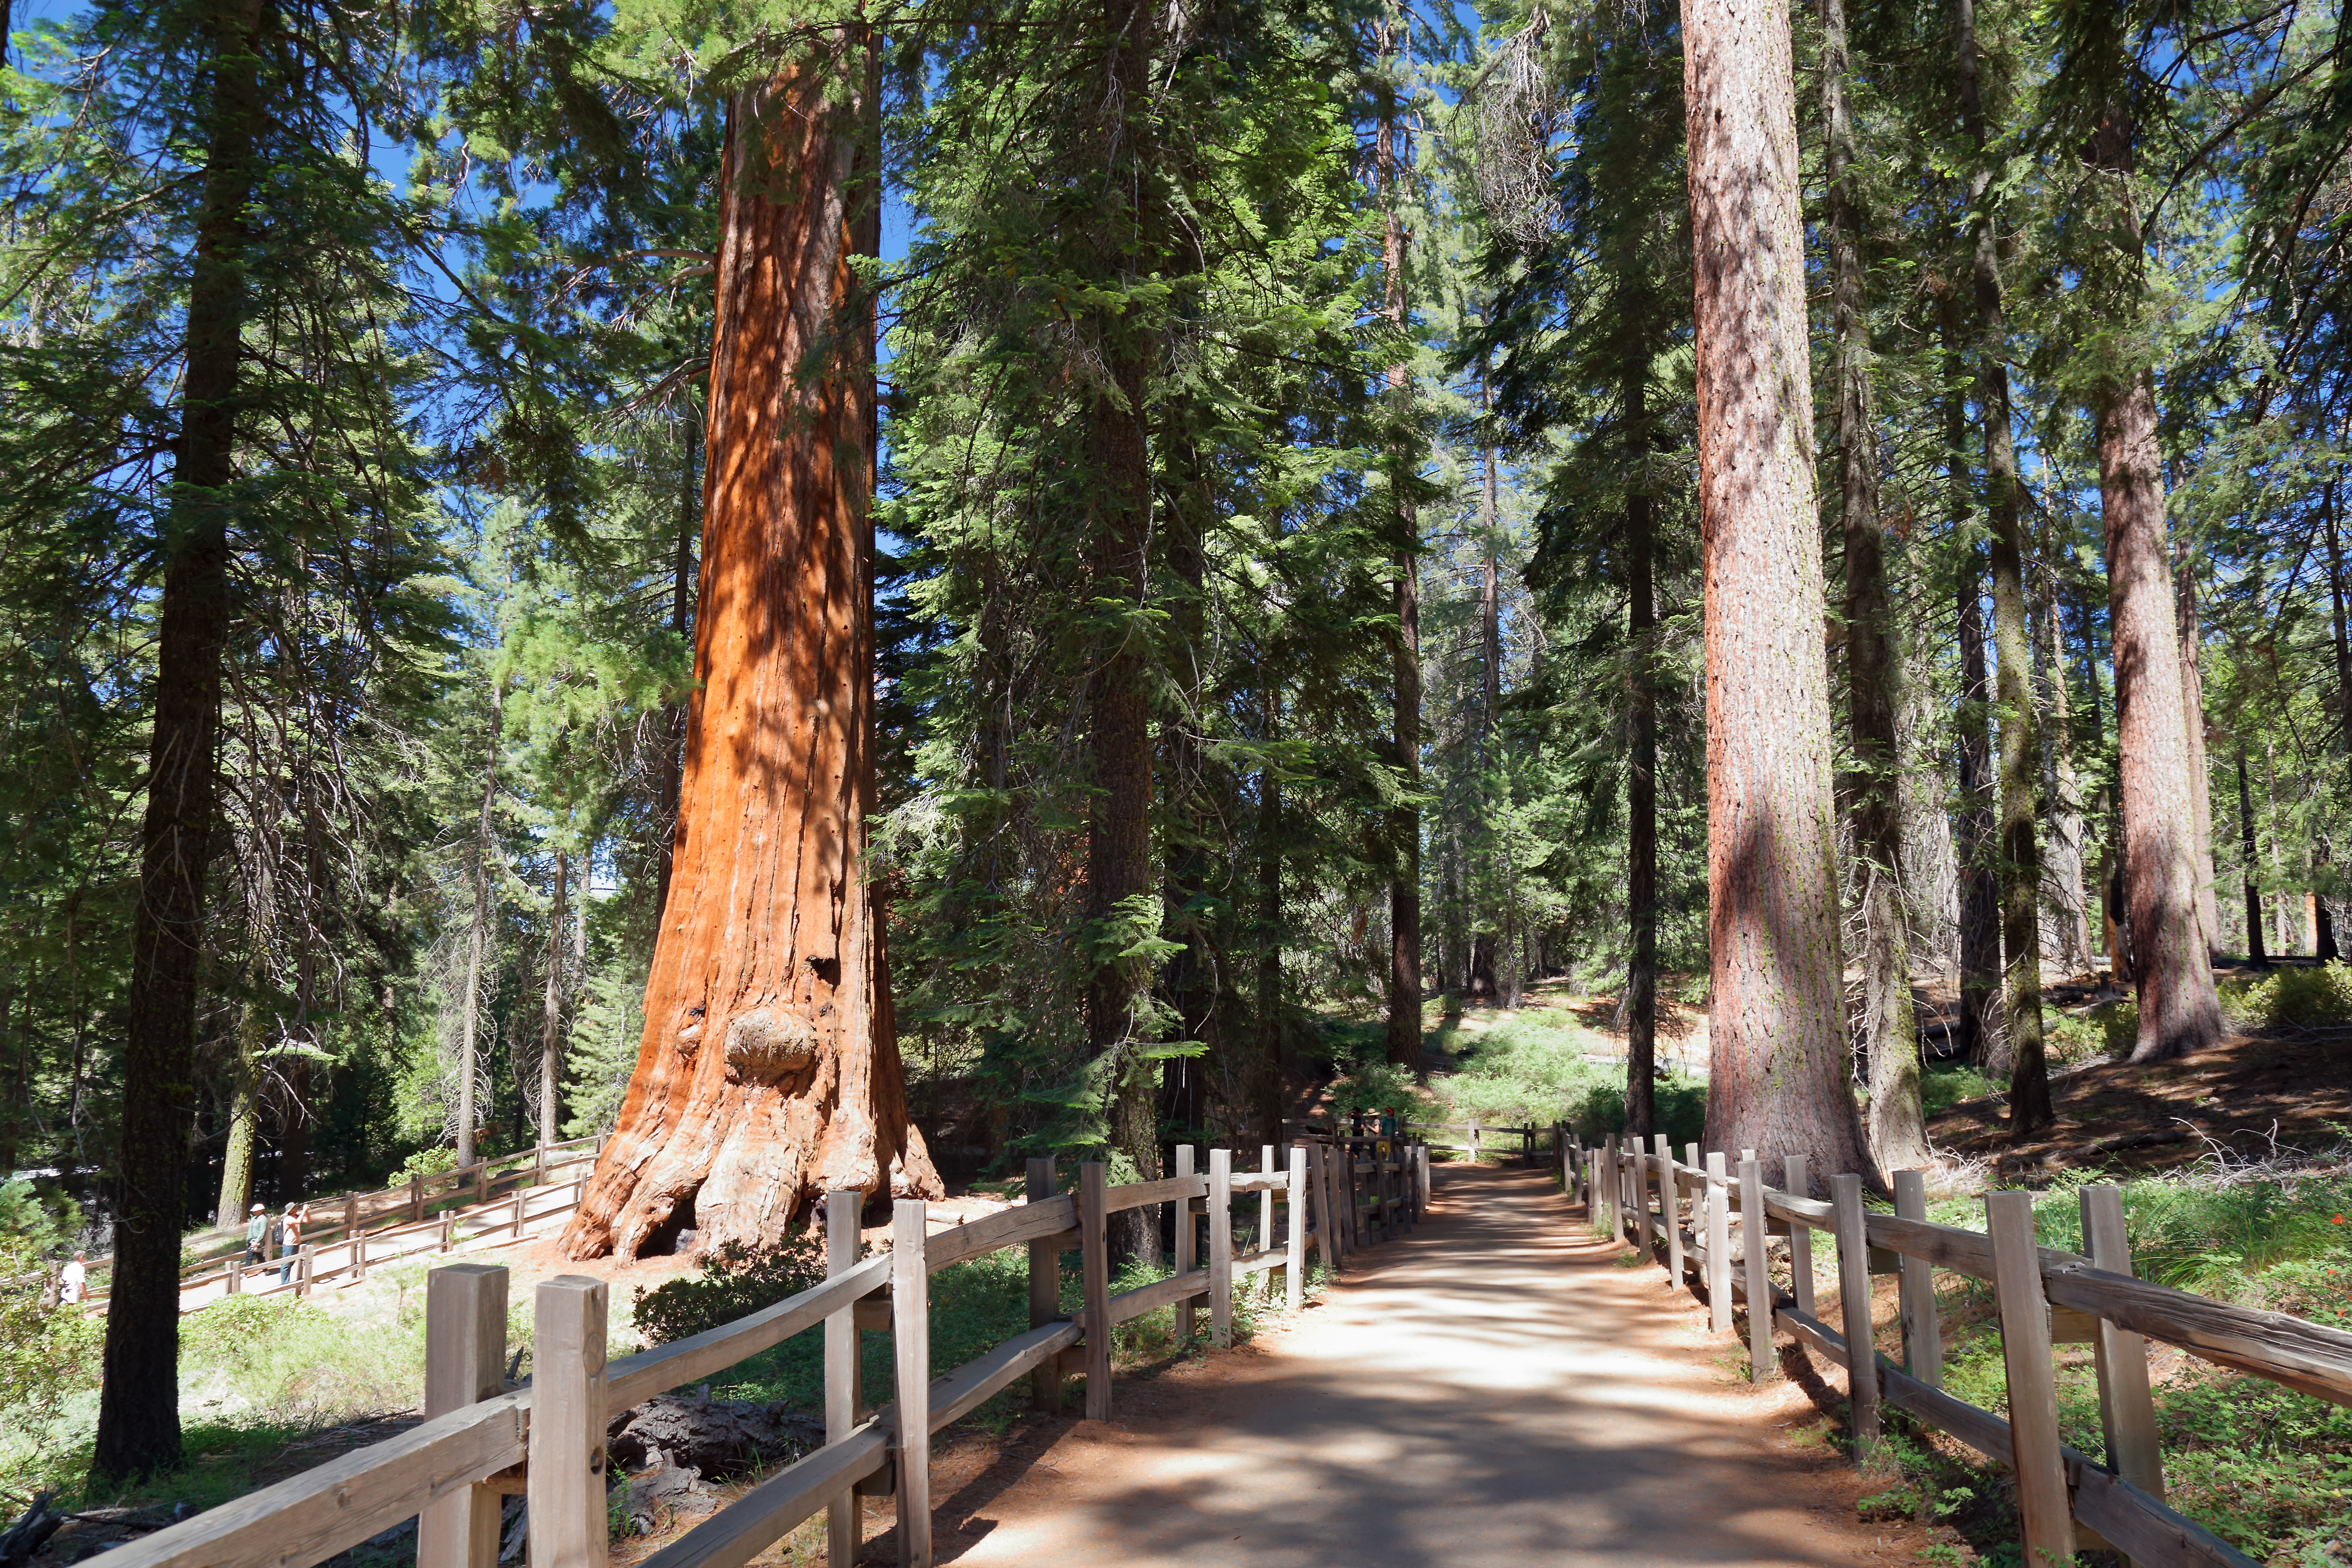 In Sequoia